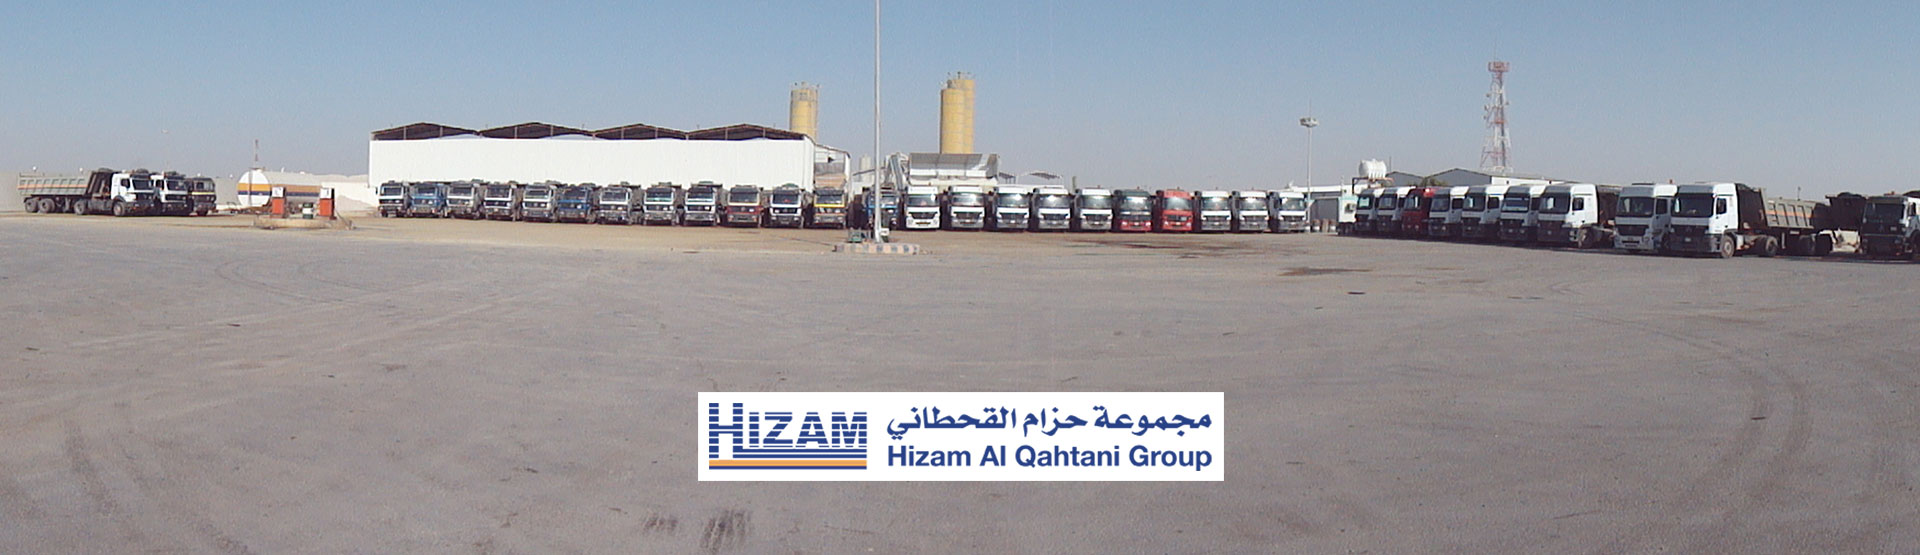 Welcome To Hizam Al Qahtani Group